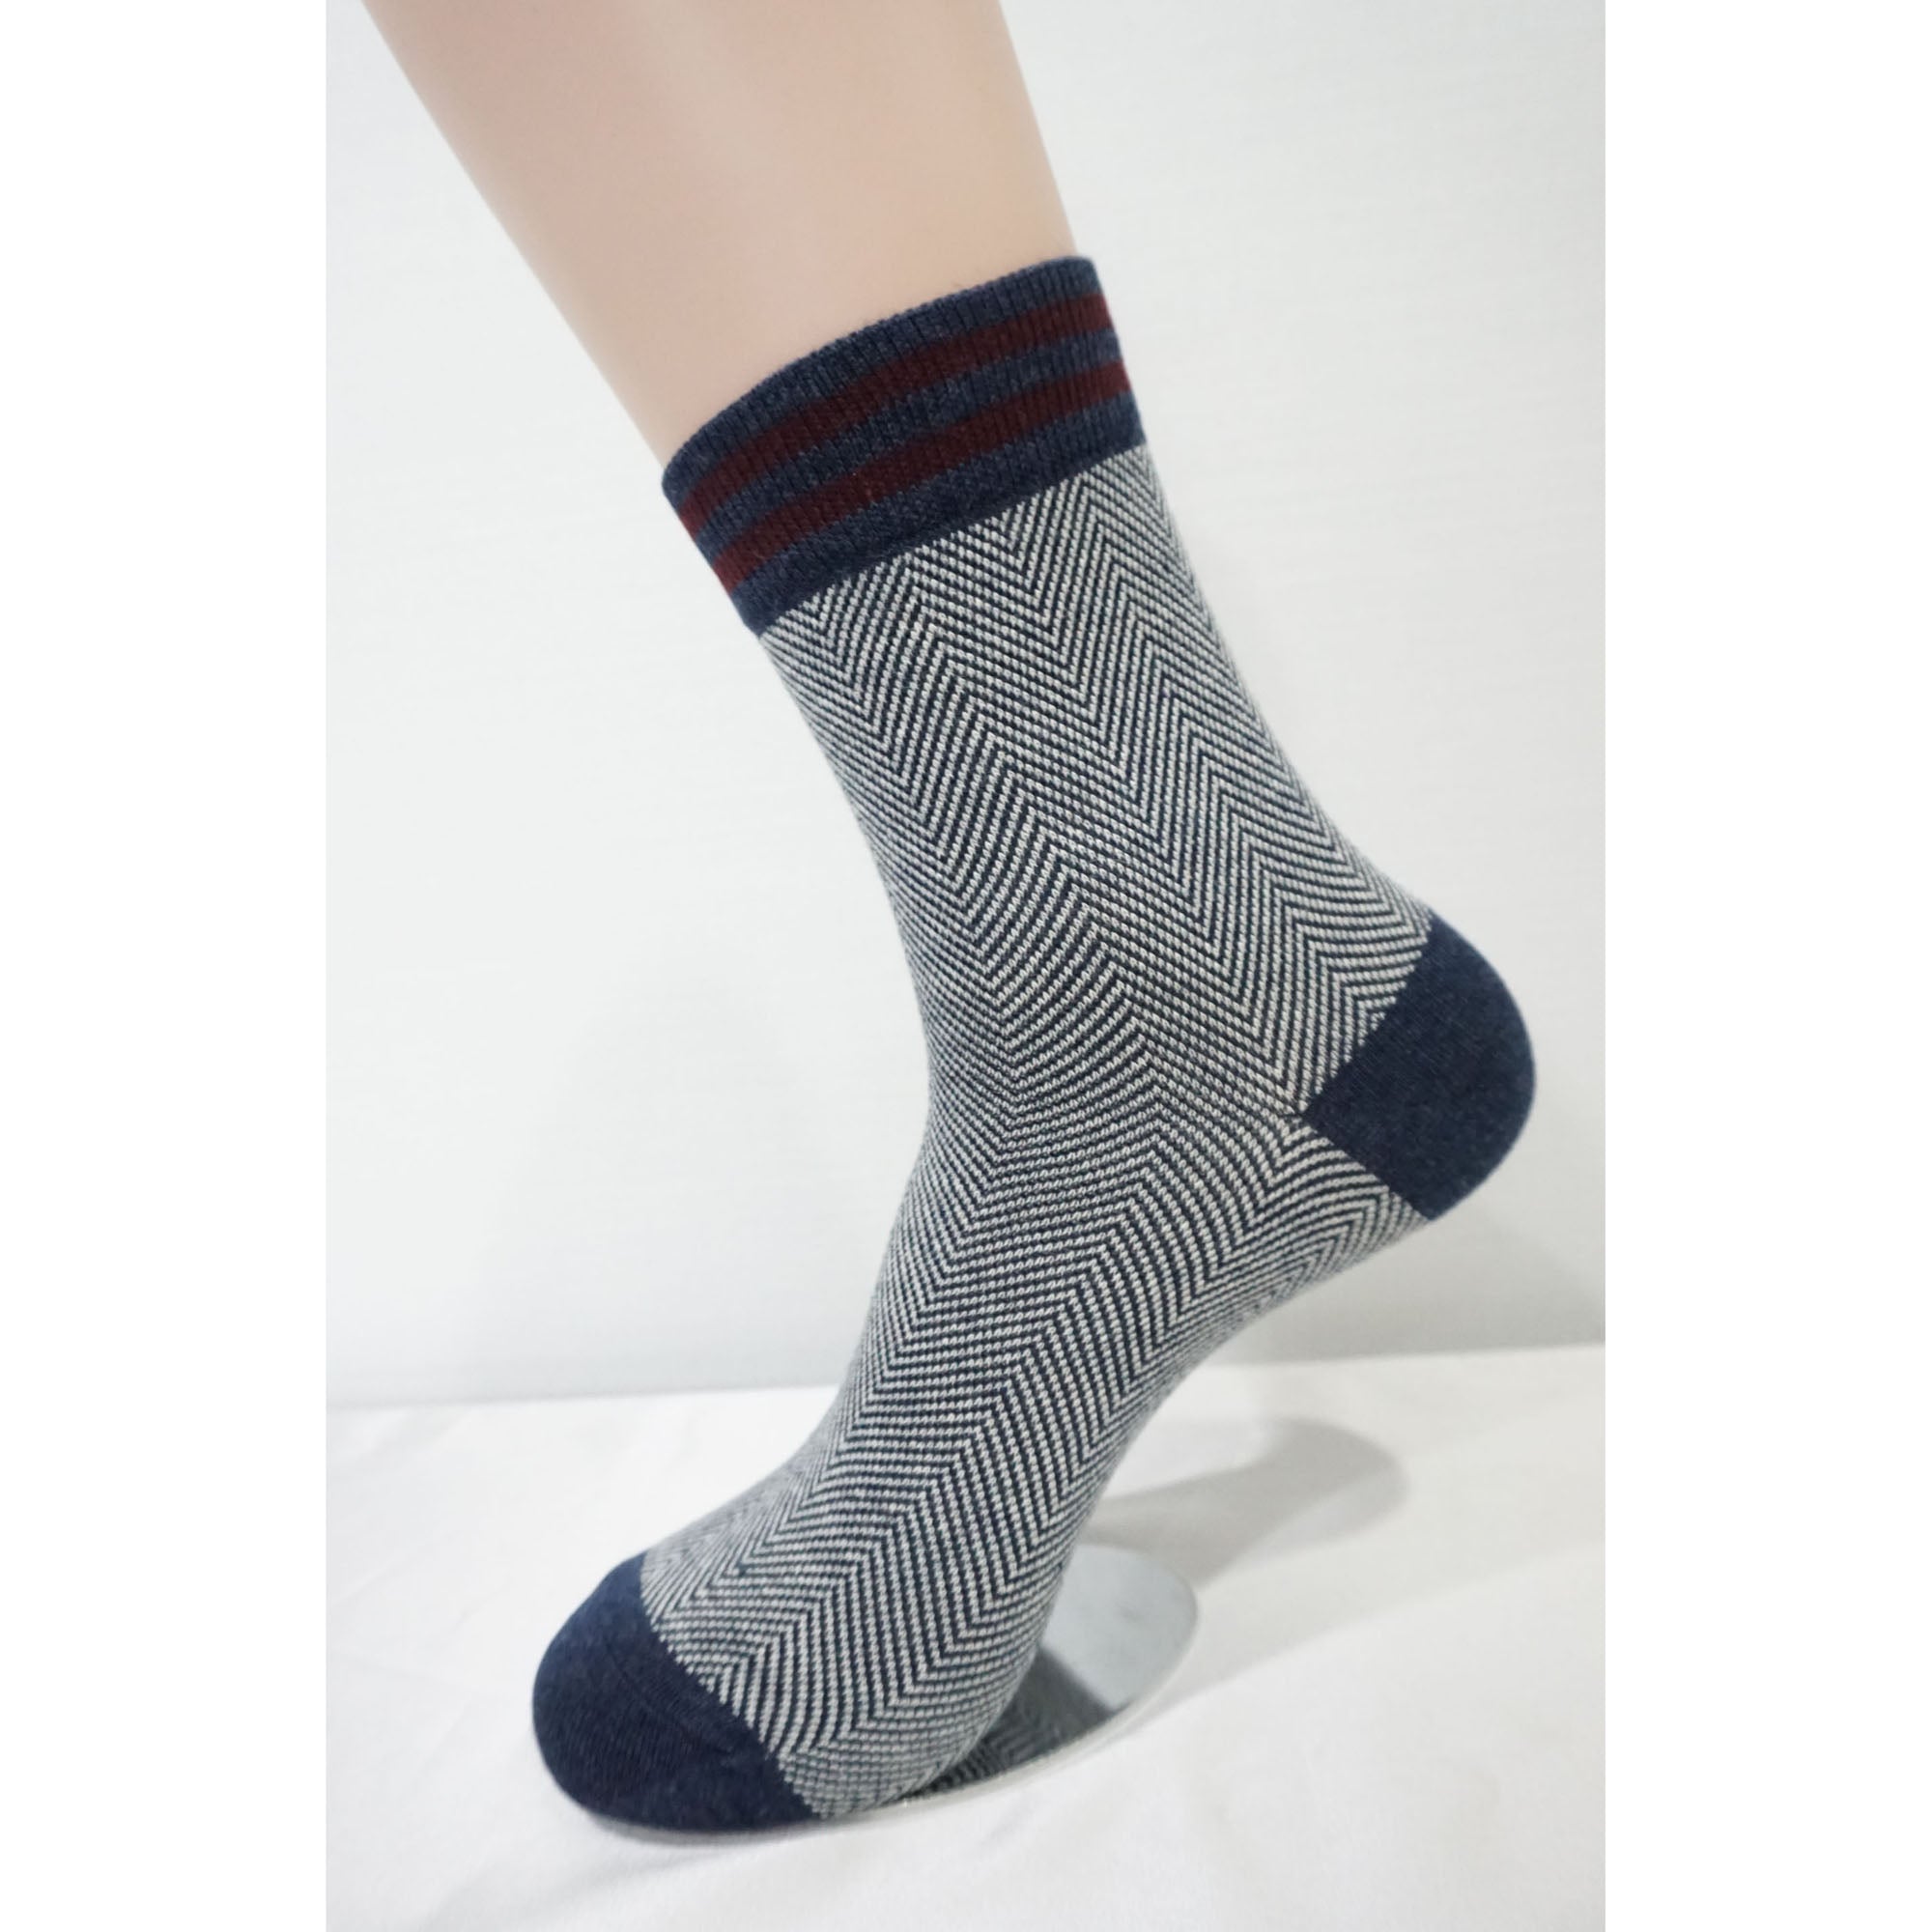 4Pack Men's Casual Cotton Patterned Socks Harringbone